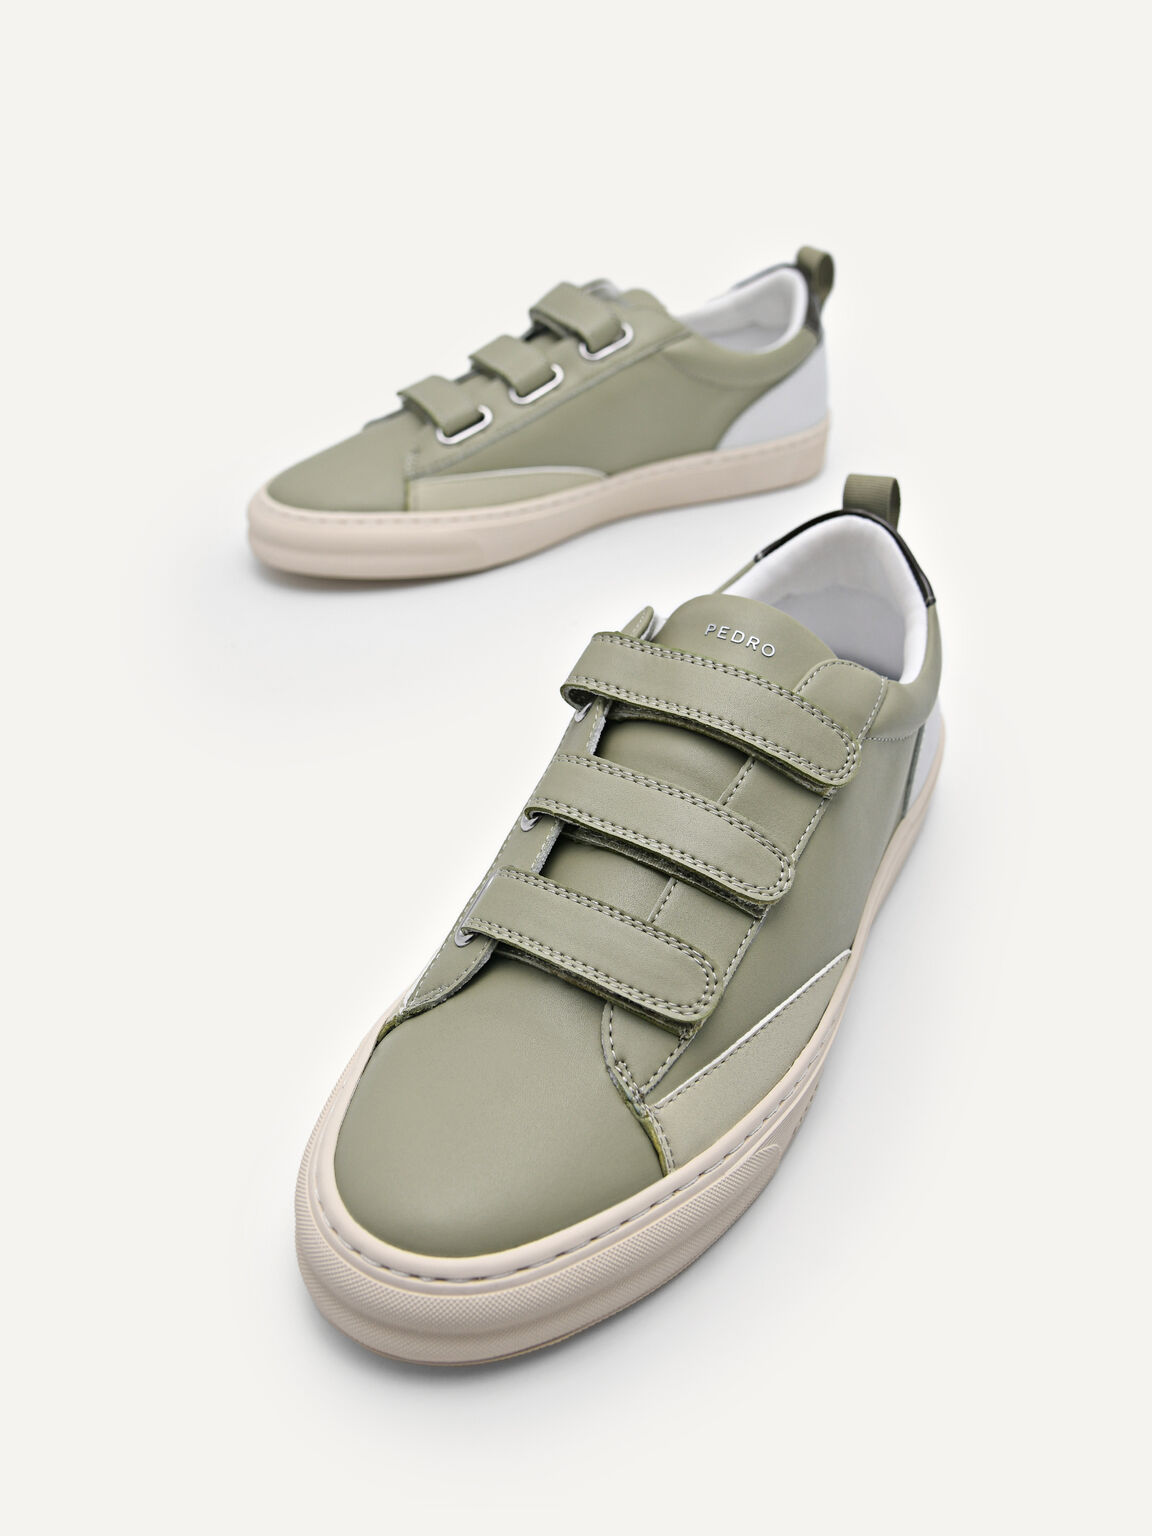 Ridge Velcro Strap Sneakers, Olive